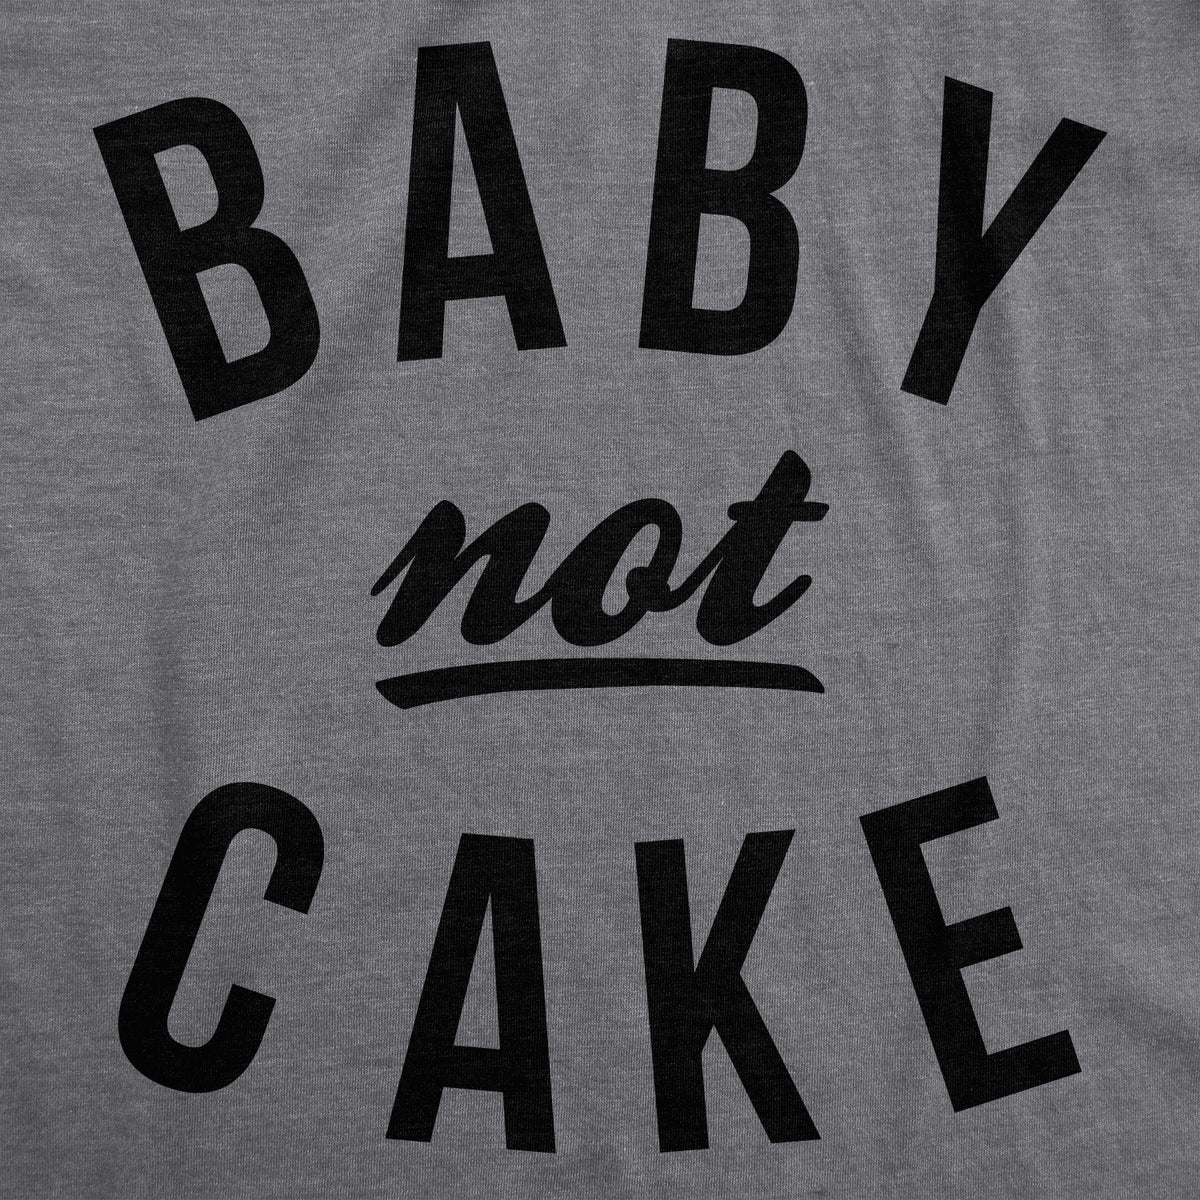 Baby Not Cake Maternity T Shirt